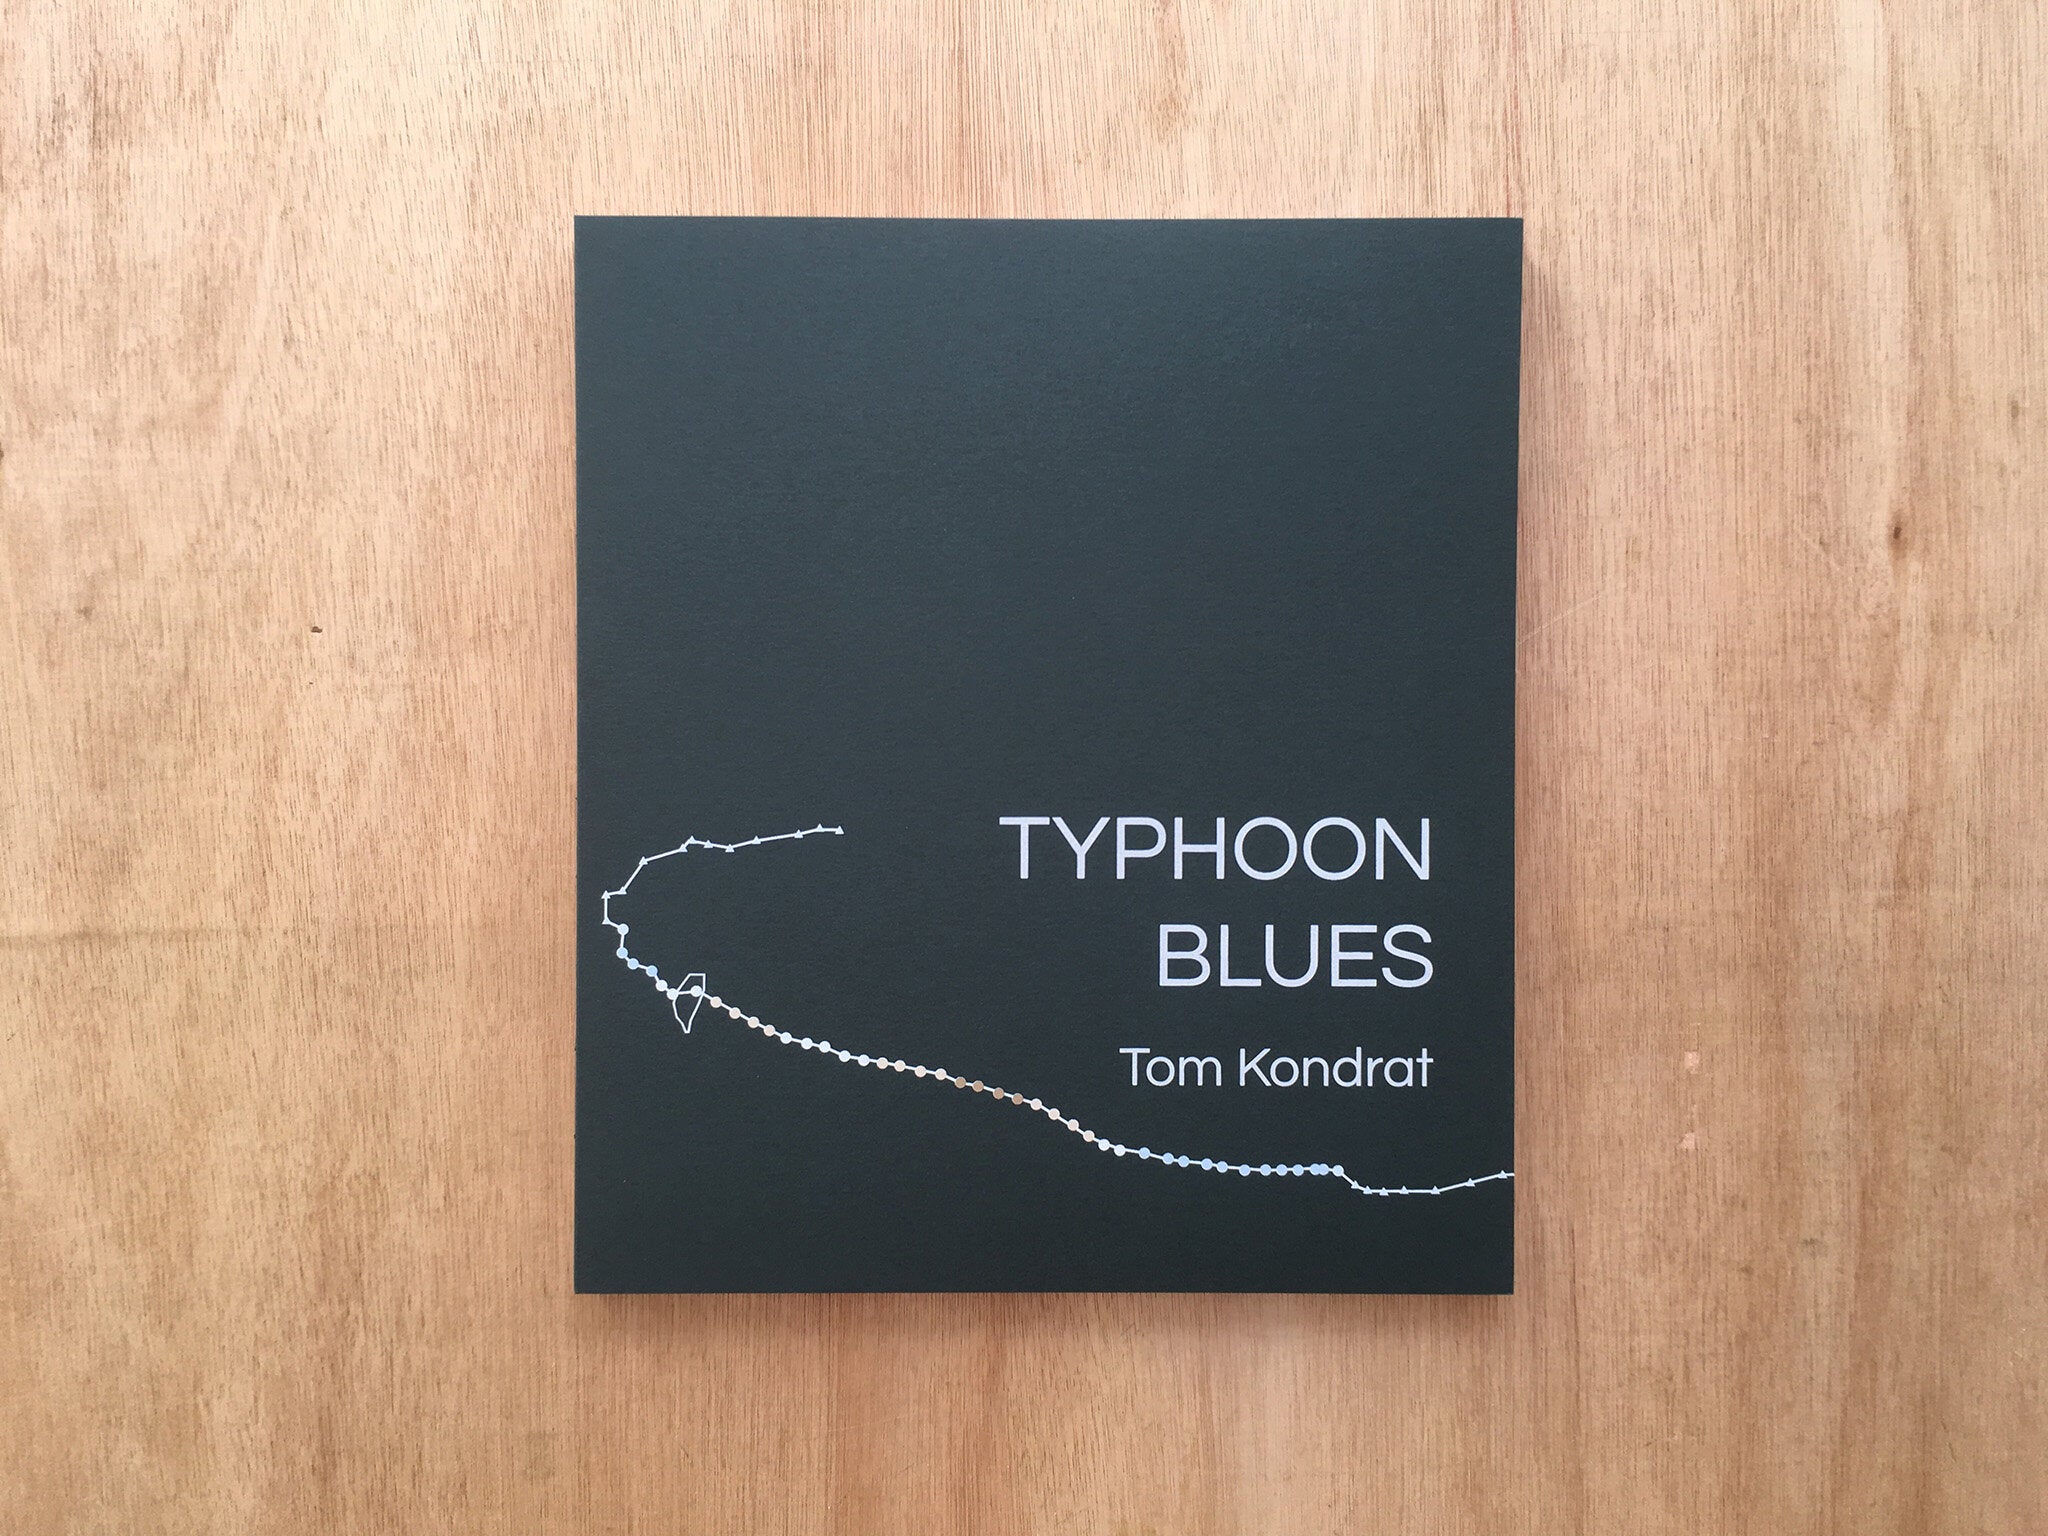 TYPHOON BLUES by Tom Kondrat